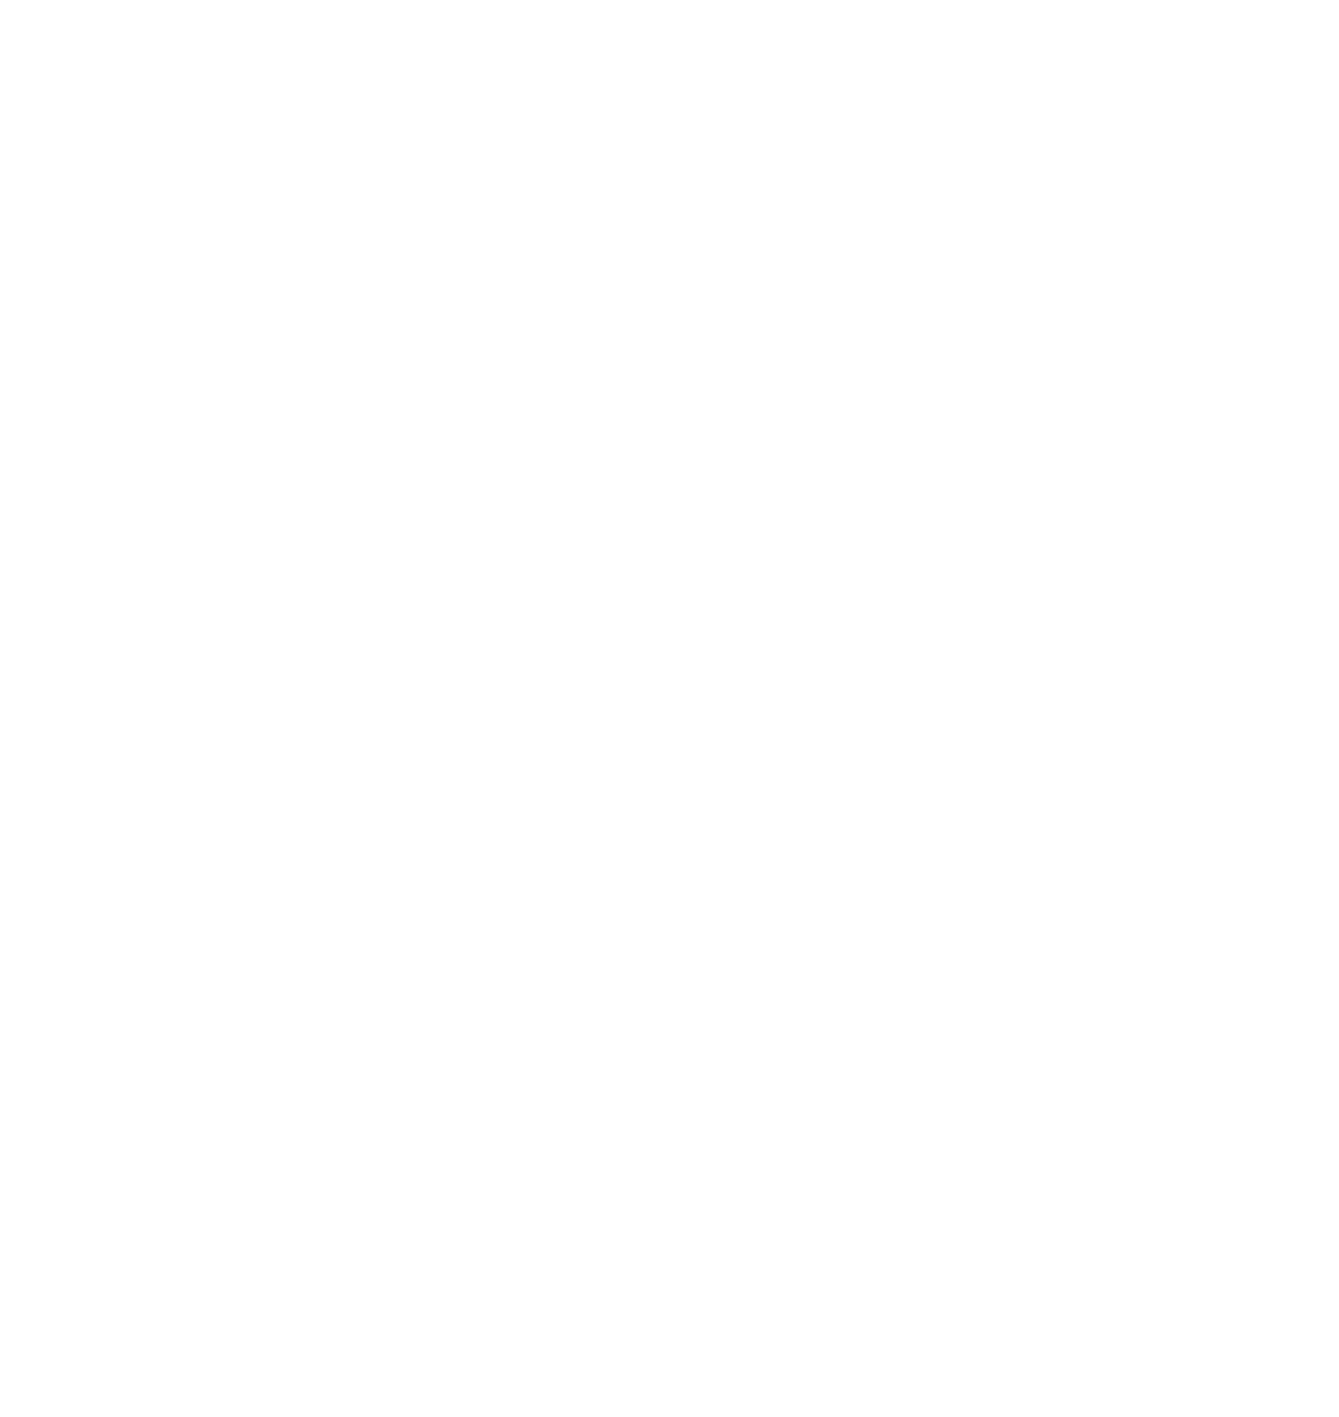 DERA Energy